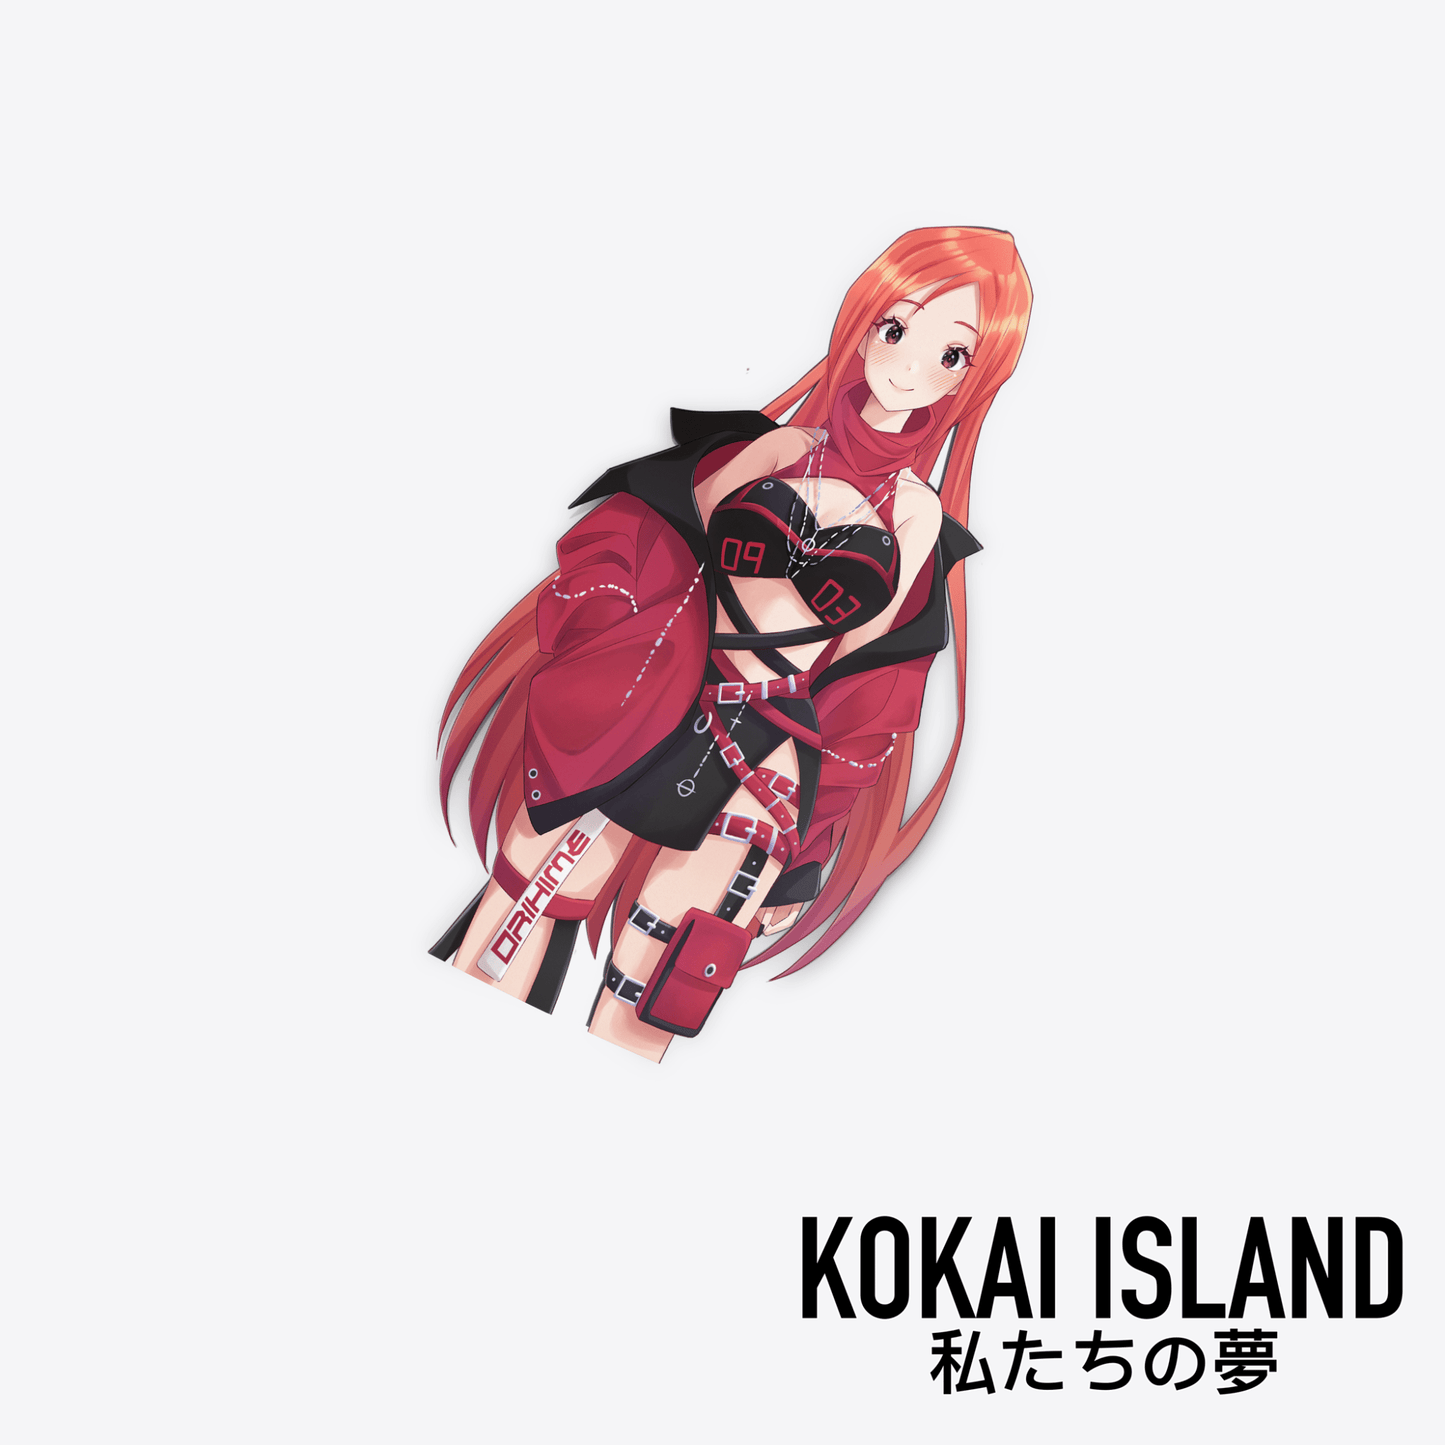 Orihime DecalDecalKokai Island